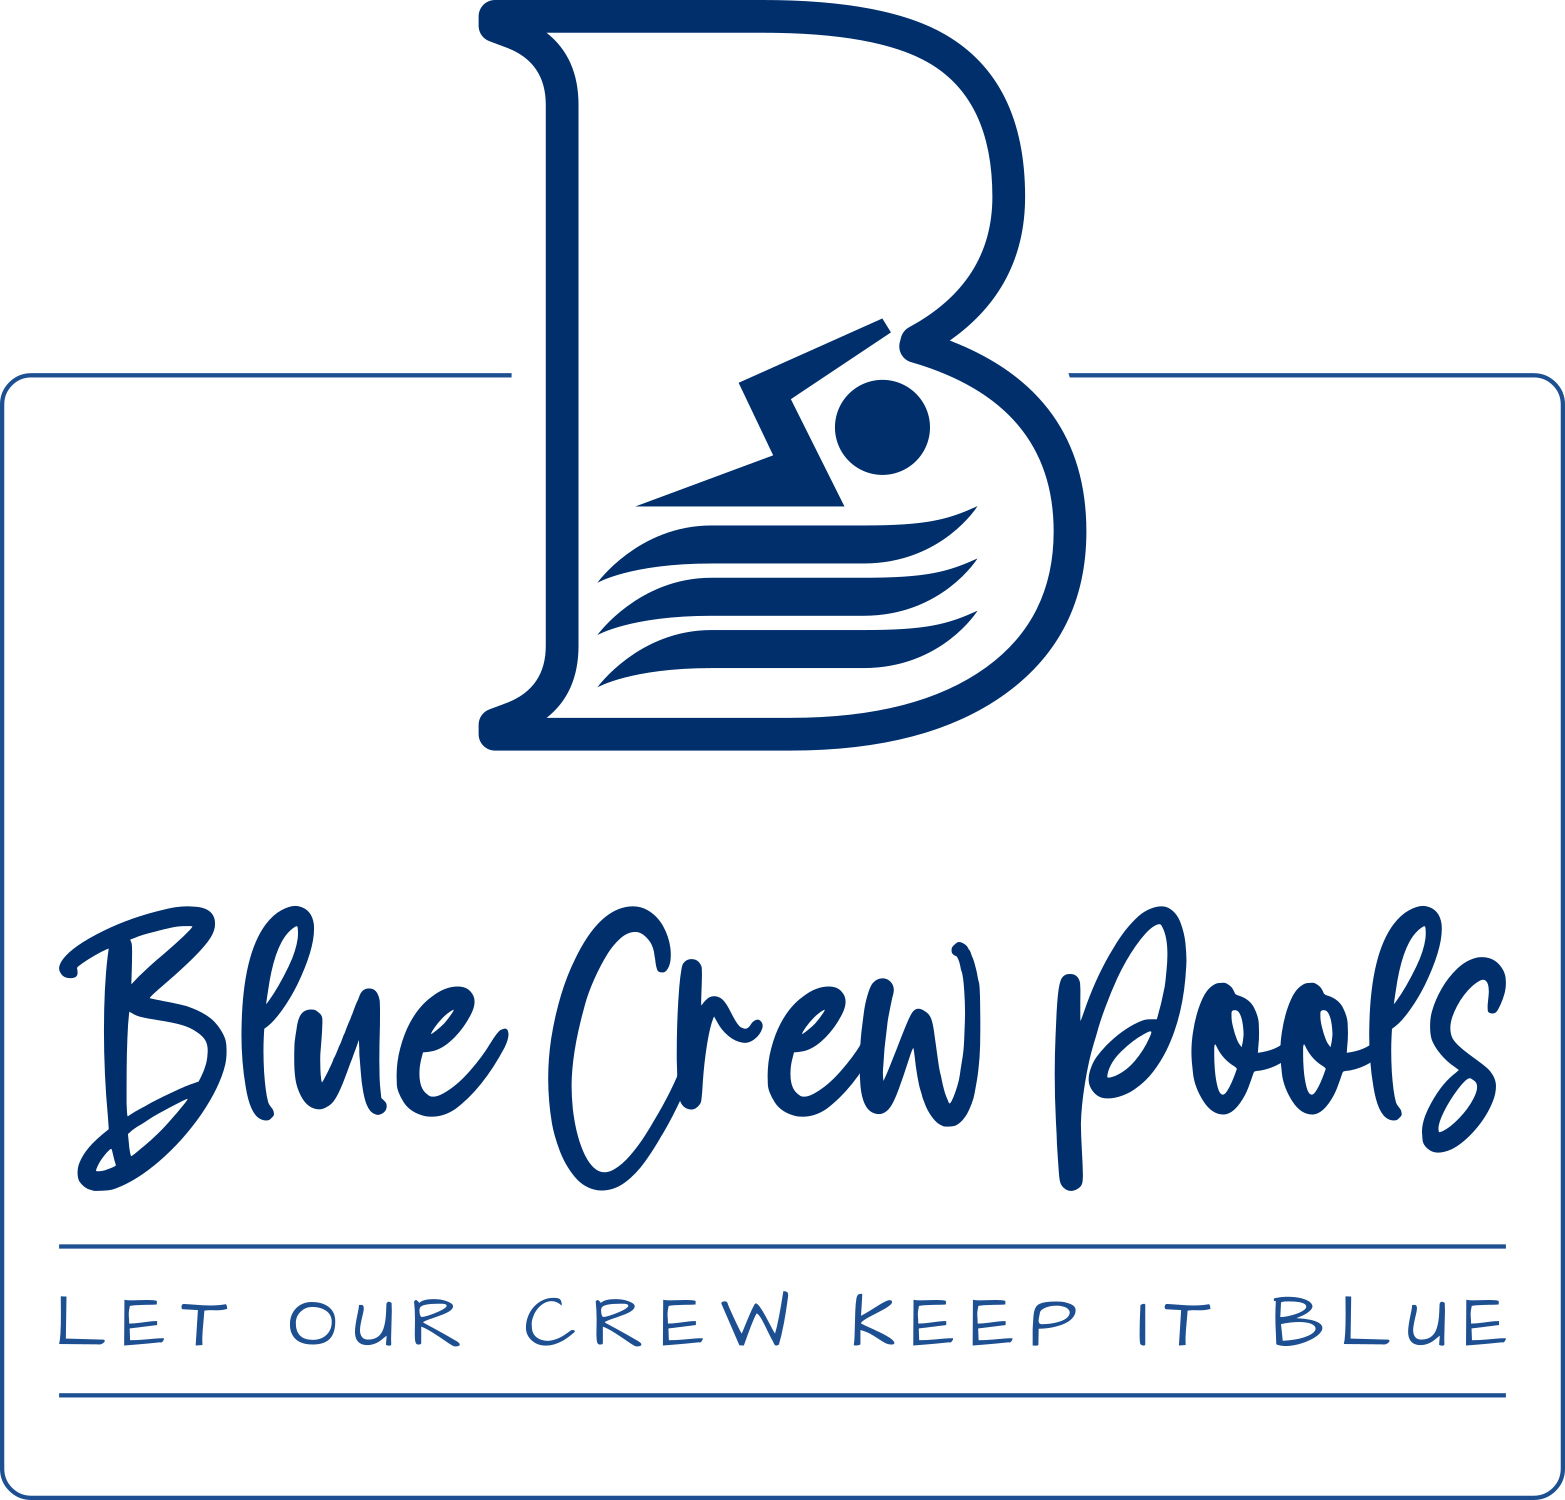 Blue Crew Pools